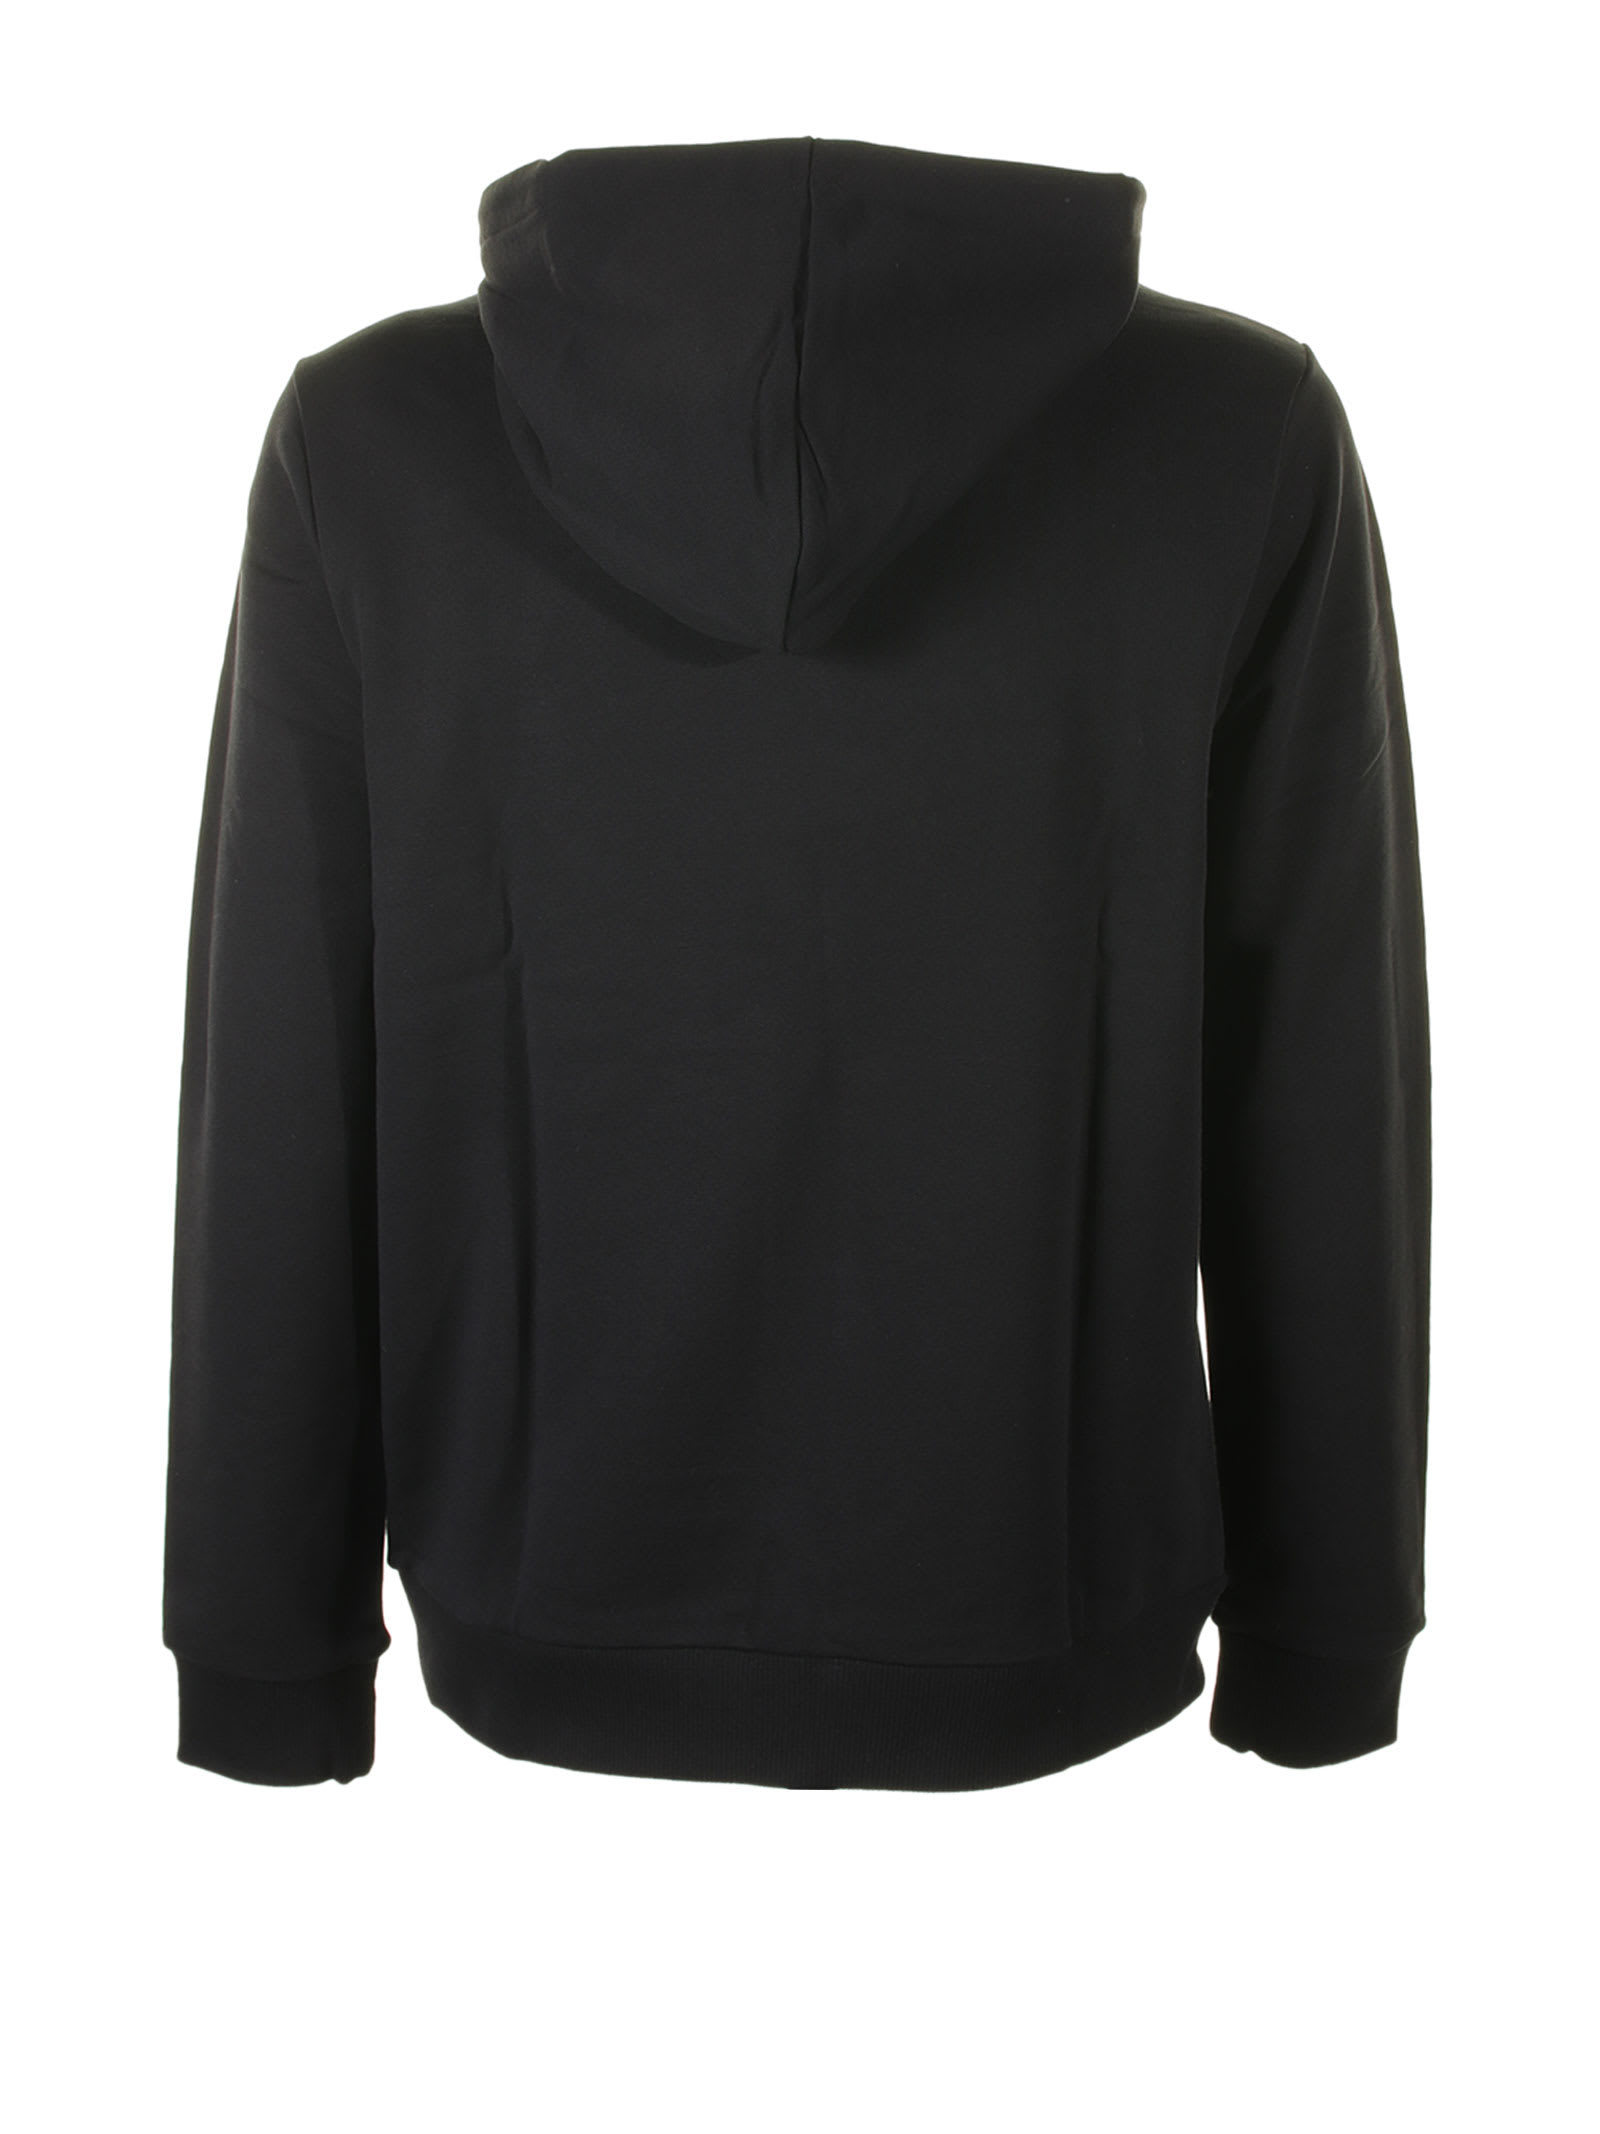 Shop Apc Black Hooded Sweatshirt